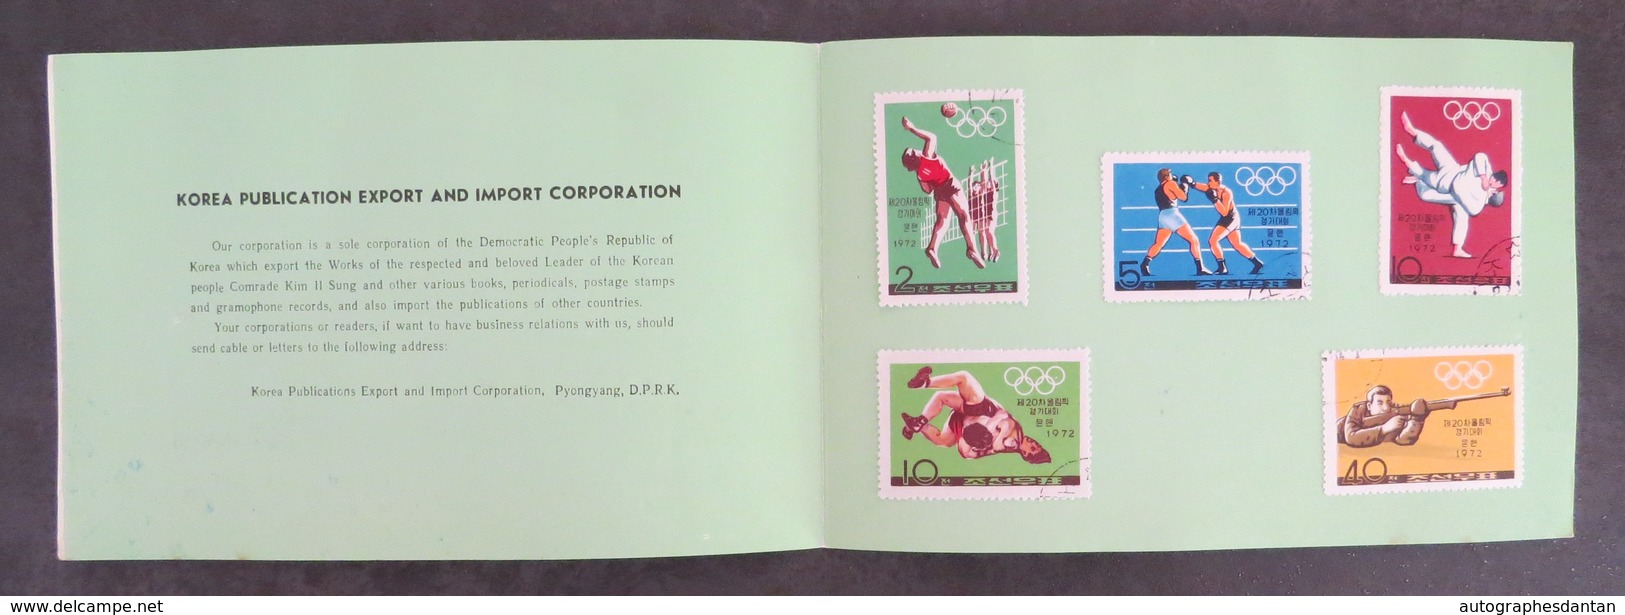 KOREAN Stamps - Jeux Olympiques Olympic Games - Pyongyang DPRK North Korea - Lake Samilpo - Timbres Corée Du Nord - Corée Du Nord